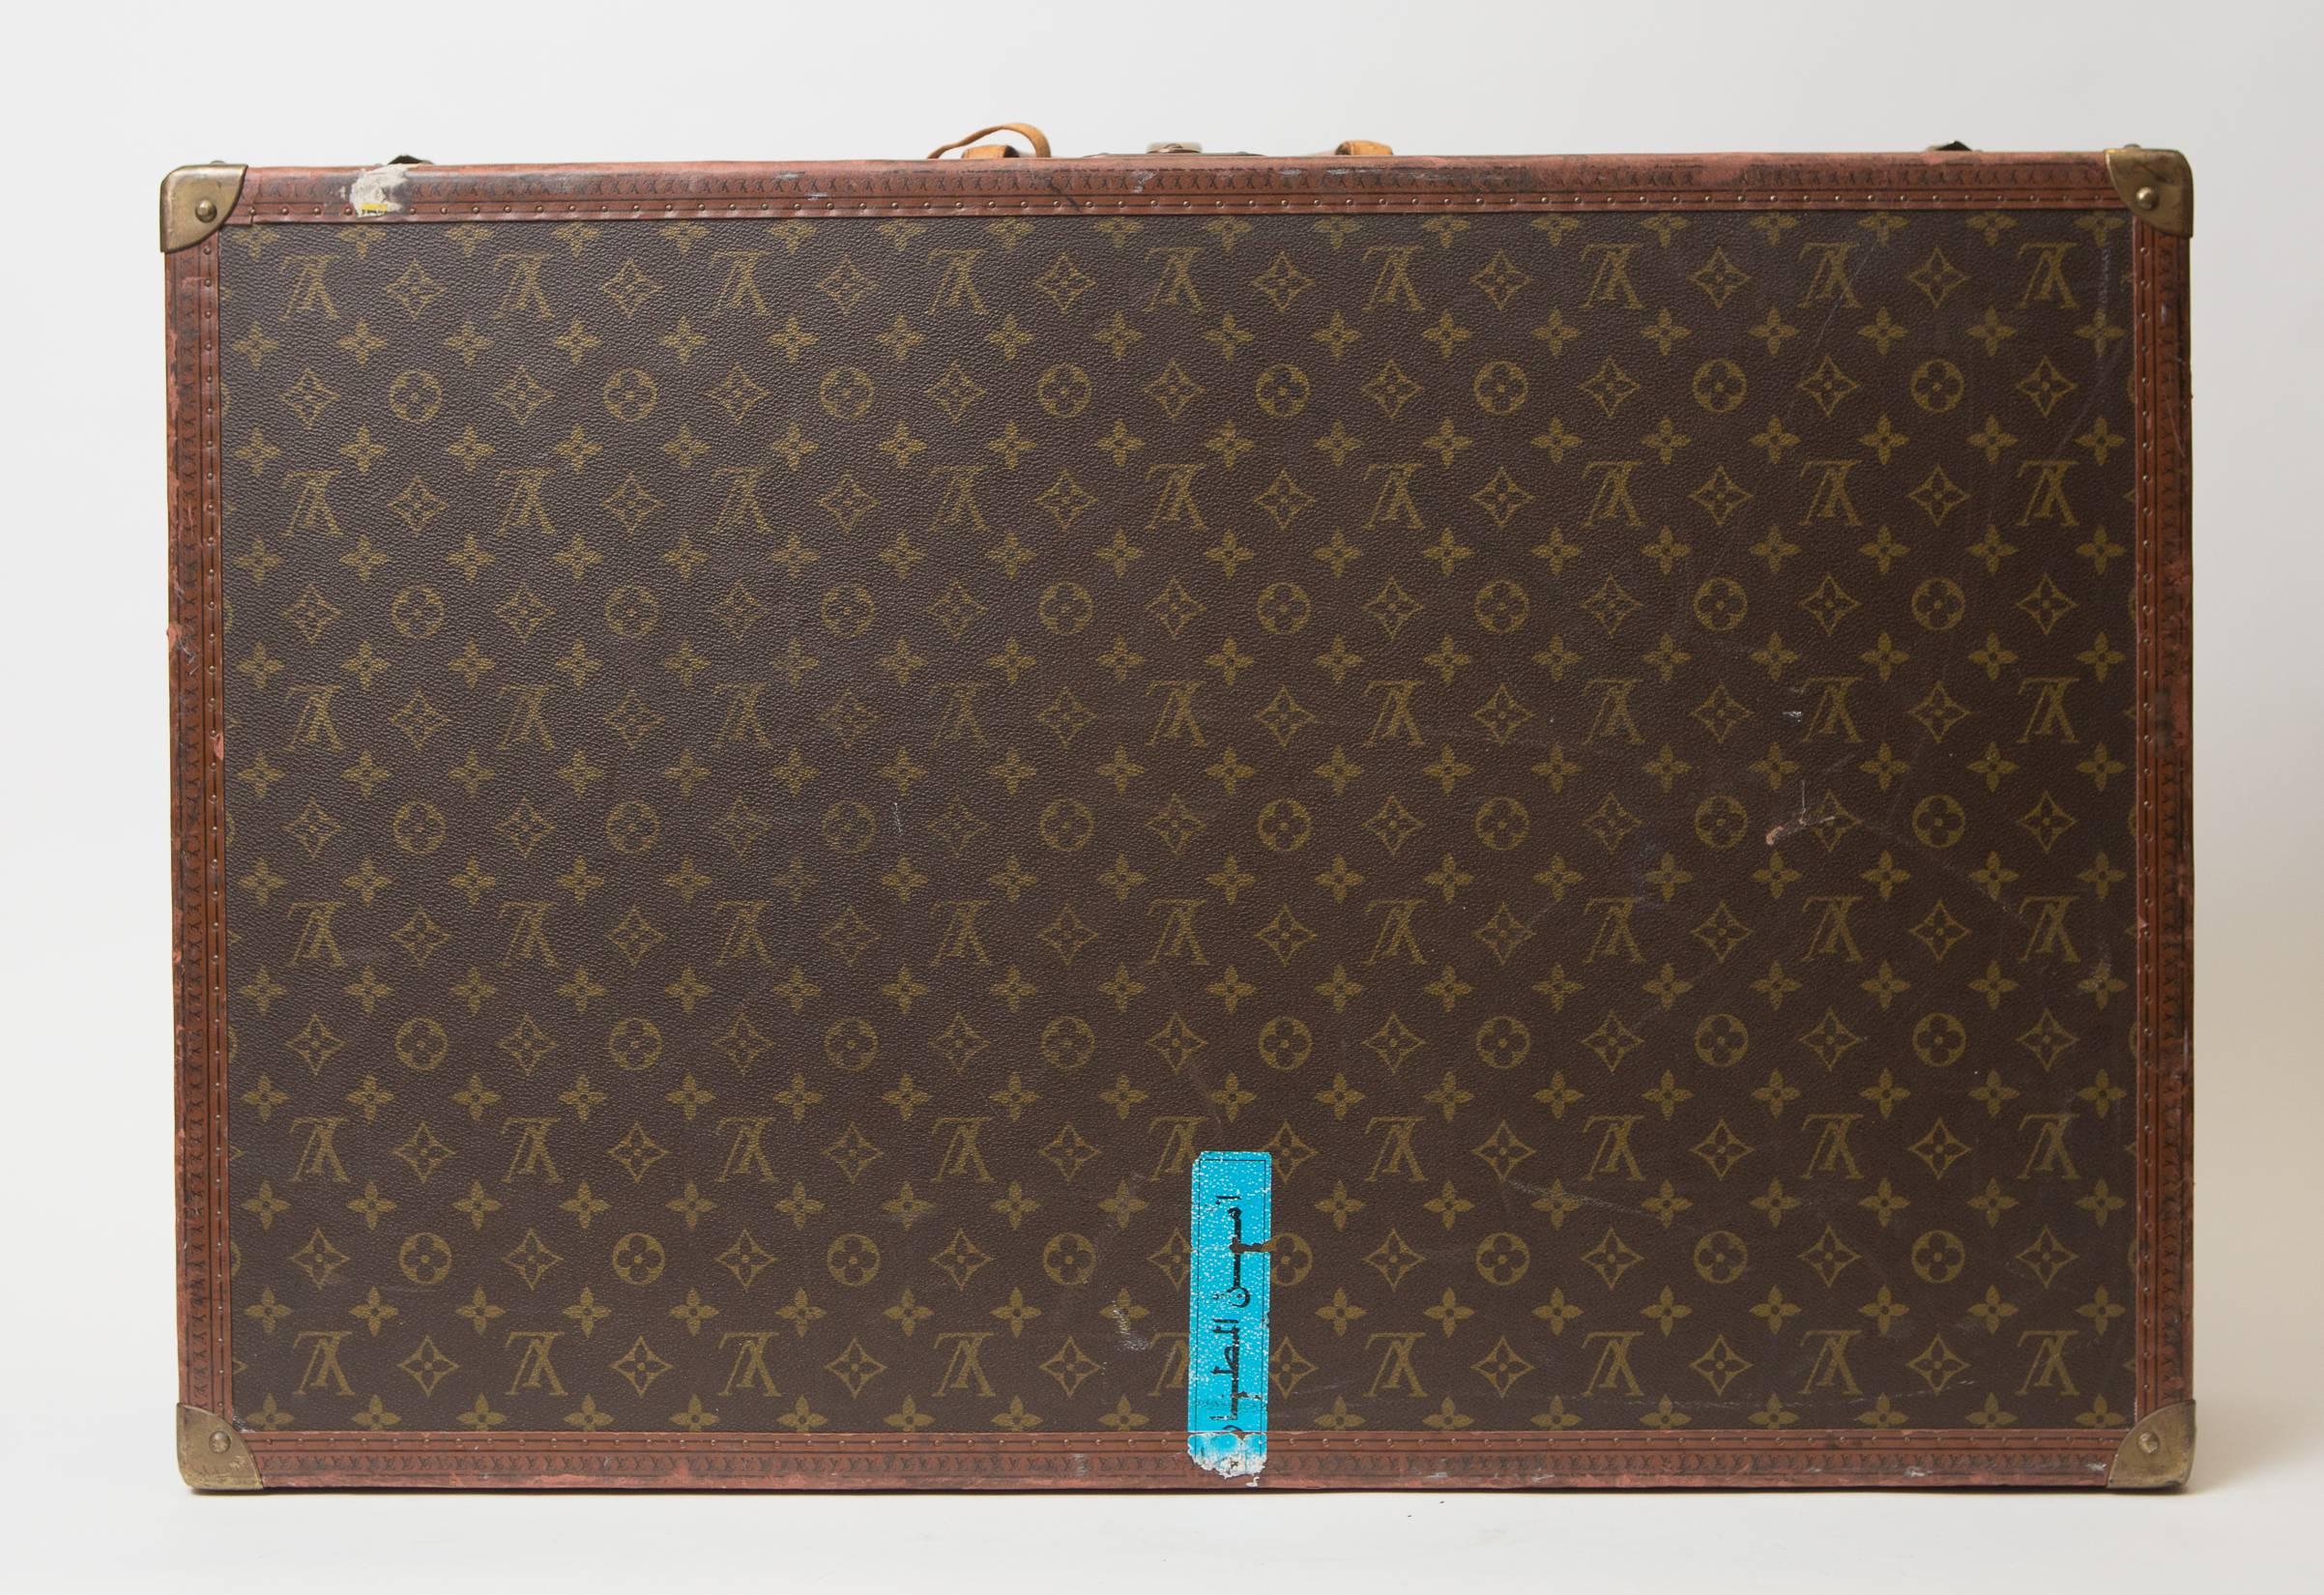 Louis Vuitton Alzar 80 monogram hardside suitcase/trunk, the largest of the Alzar line. Trunk originally retails at $8,900.